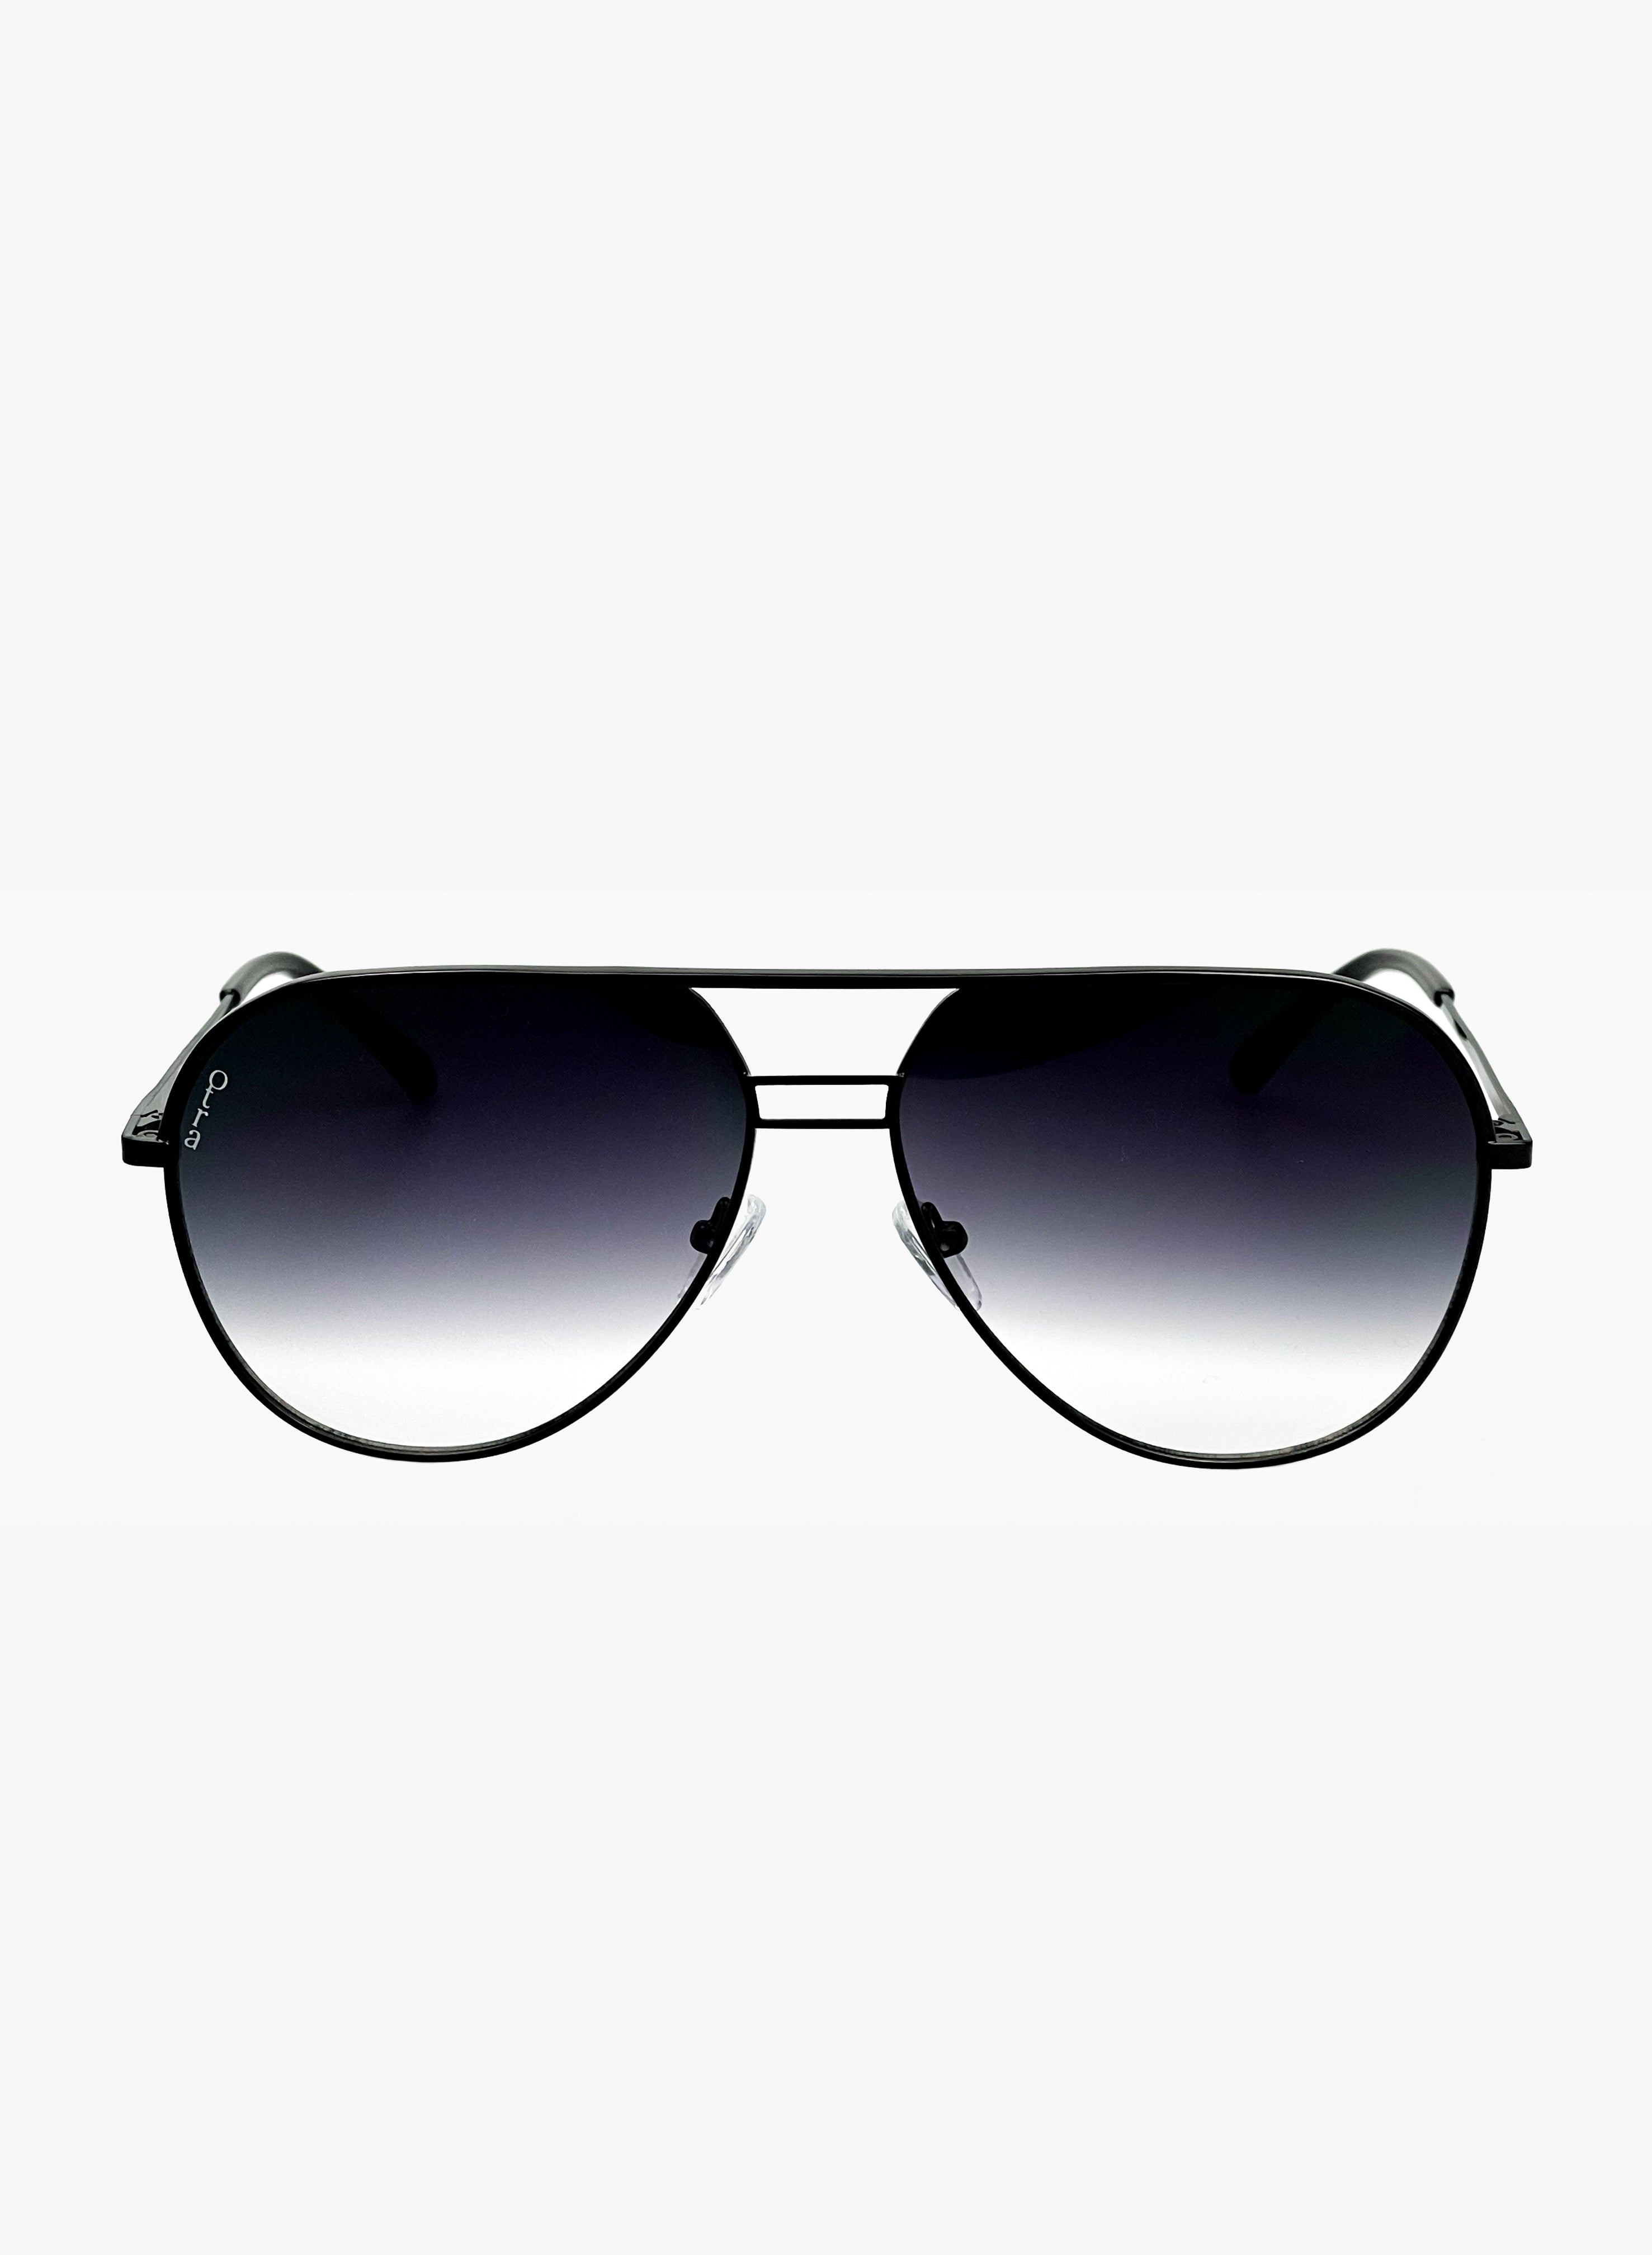 Extreme Small Oval Sunglasses Neutral Colored Flat Lens 51mm - sunglass.la